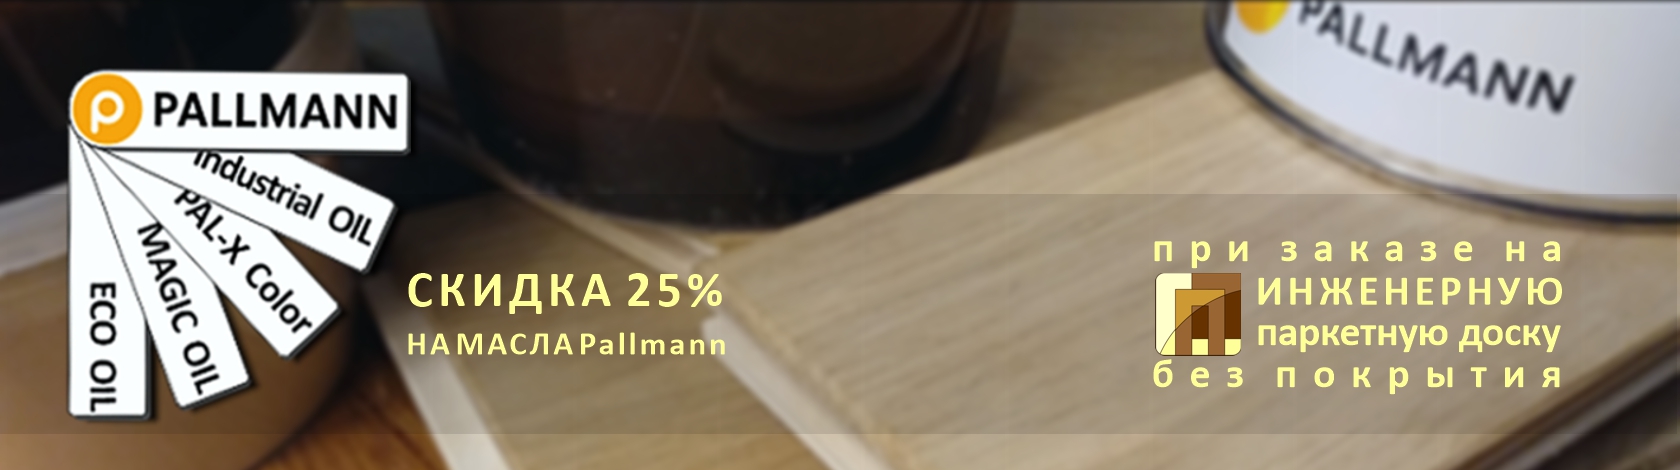 Скидка 25% на масла Pallmann